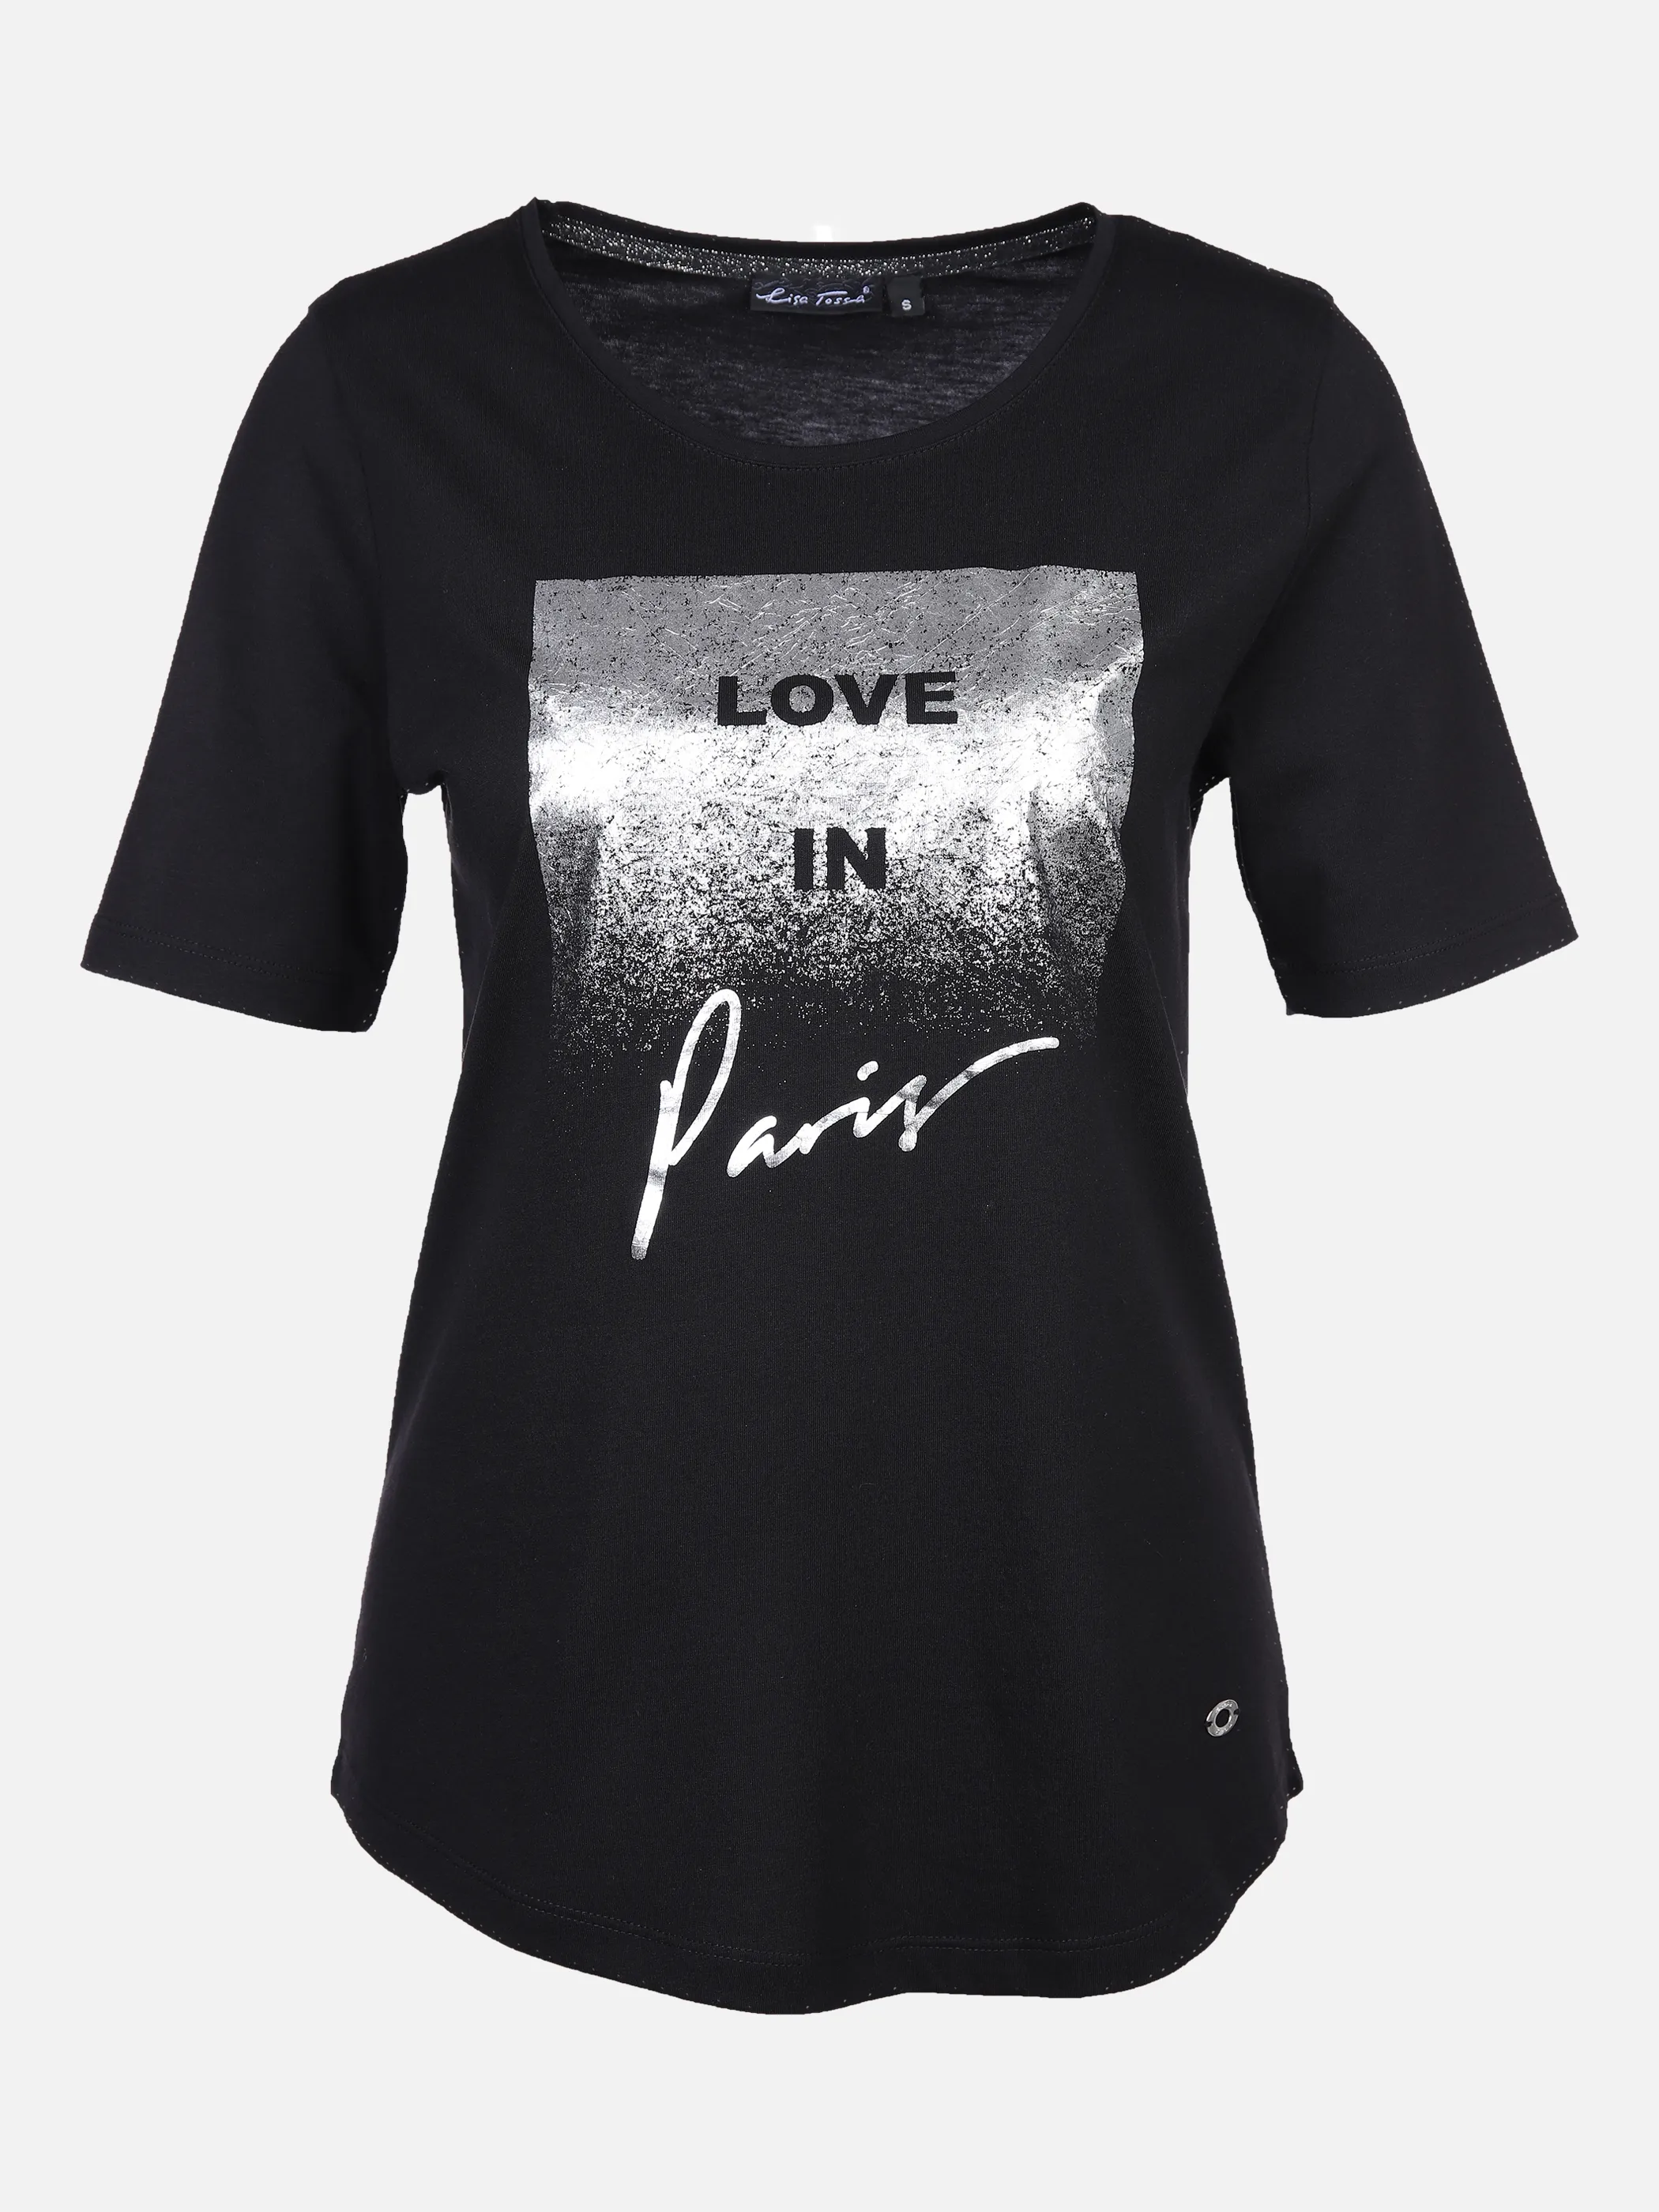 Lisa Tossa Da-T-Shirt mit Folienprint Schwarz 877570 SCHWARZ 1